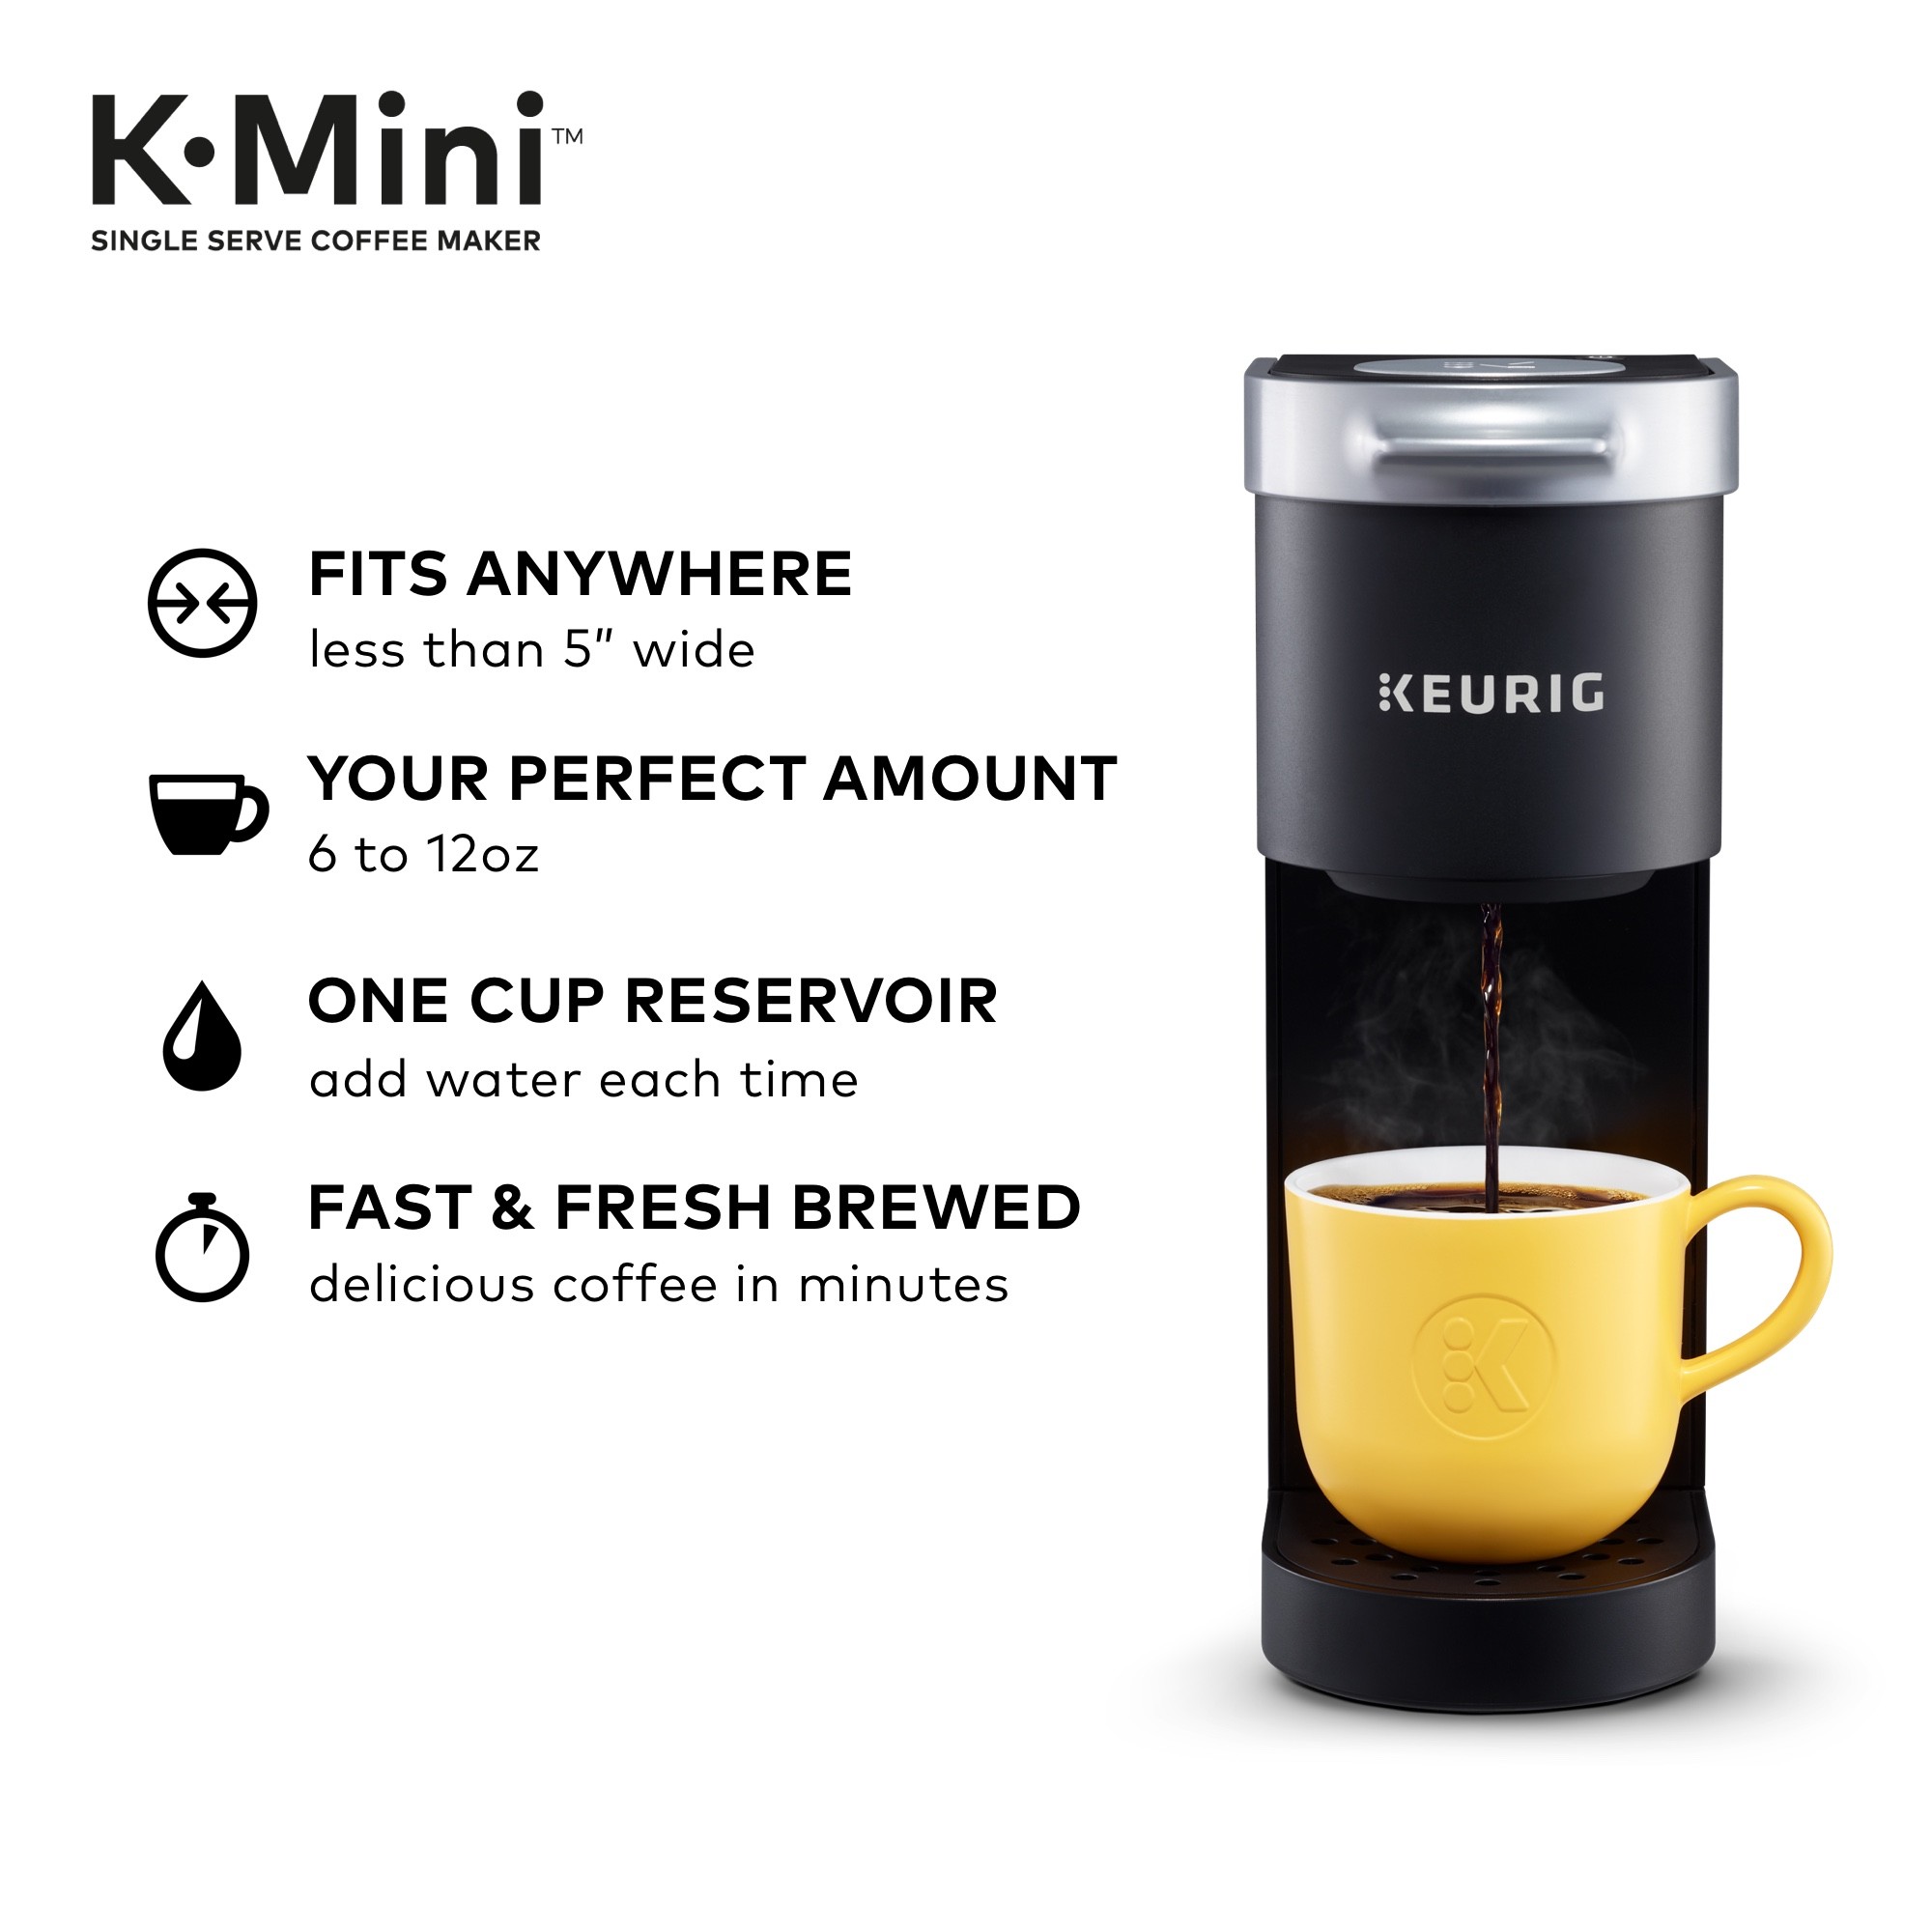 Keurig K-Mini Single Serve Coffee Maker, Black - image 3 of 21